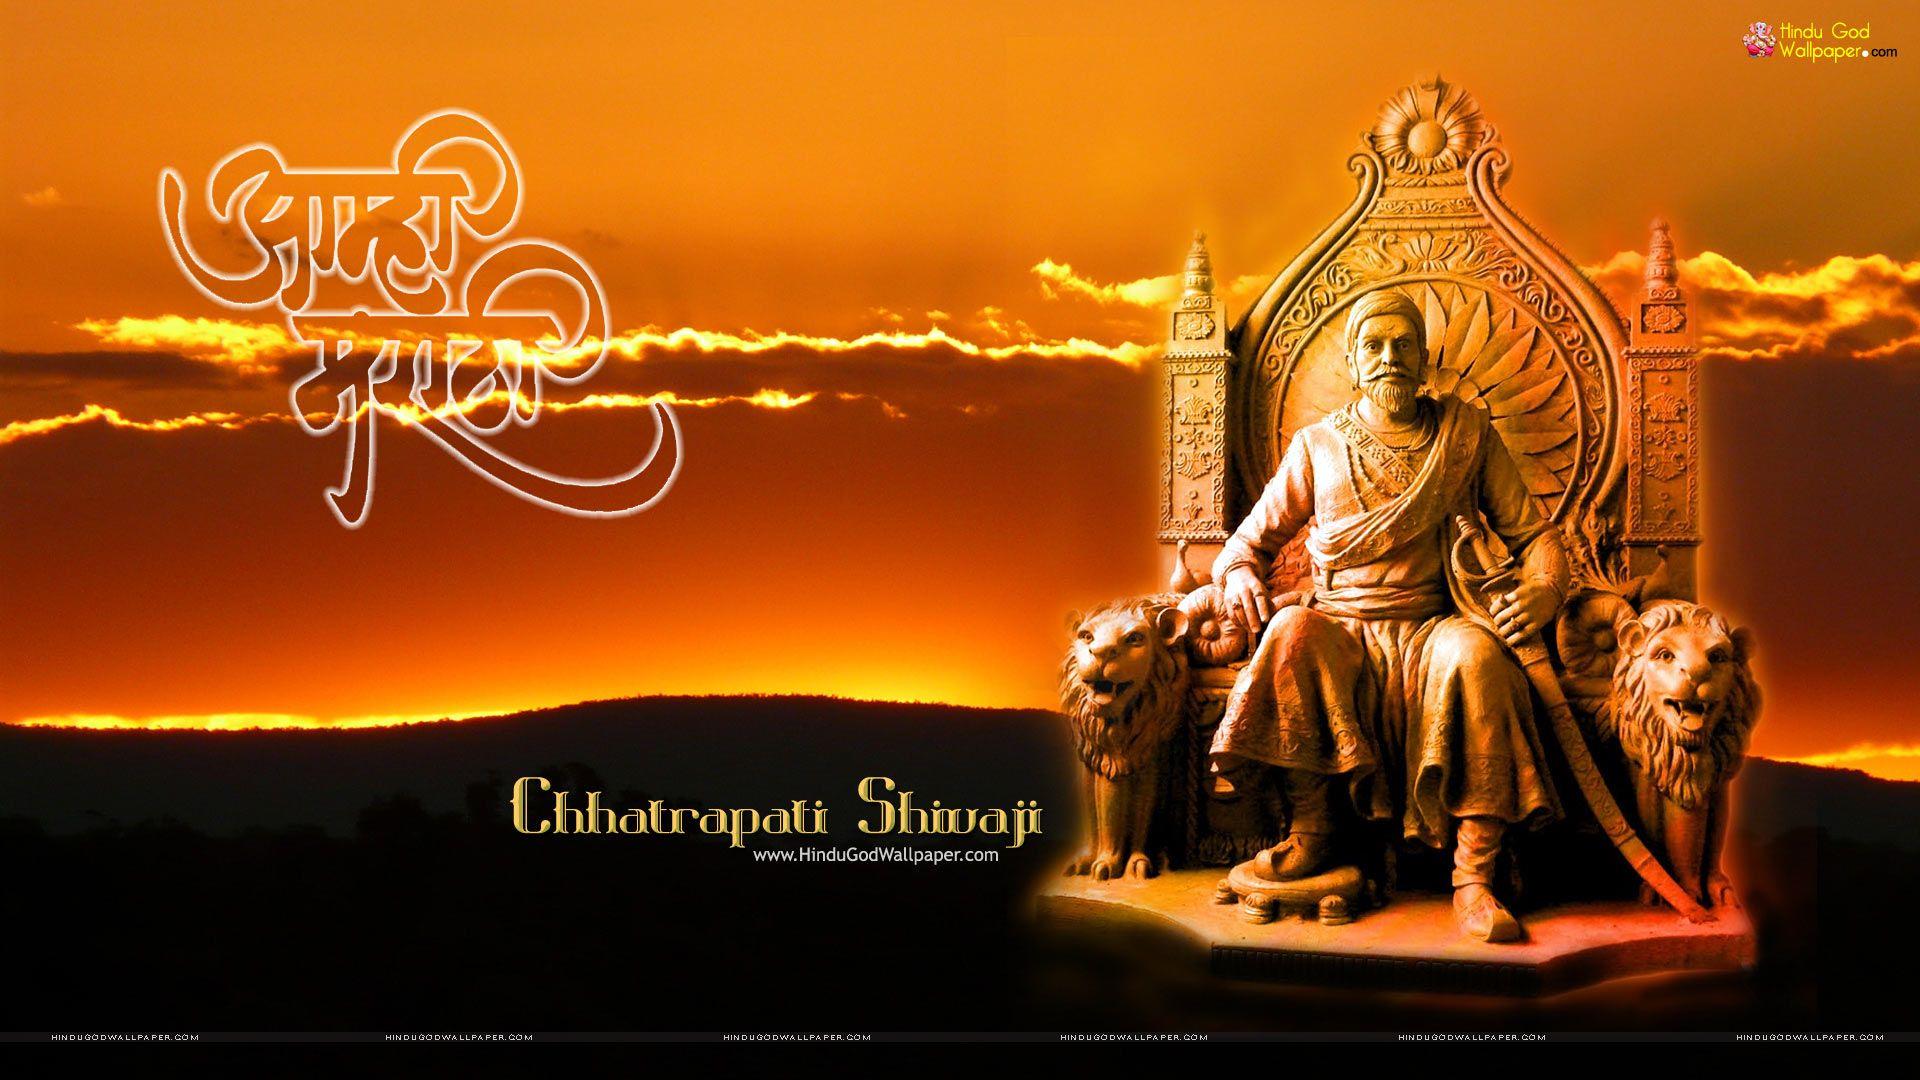 Chatrapati Shivaji Maharaj Wallpaper Free Download. Wallpaper